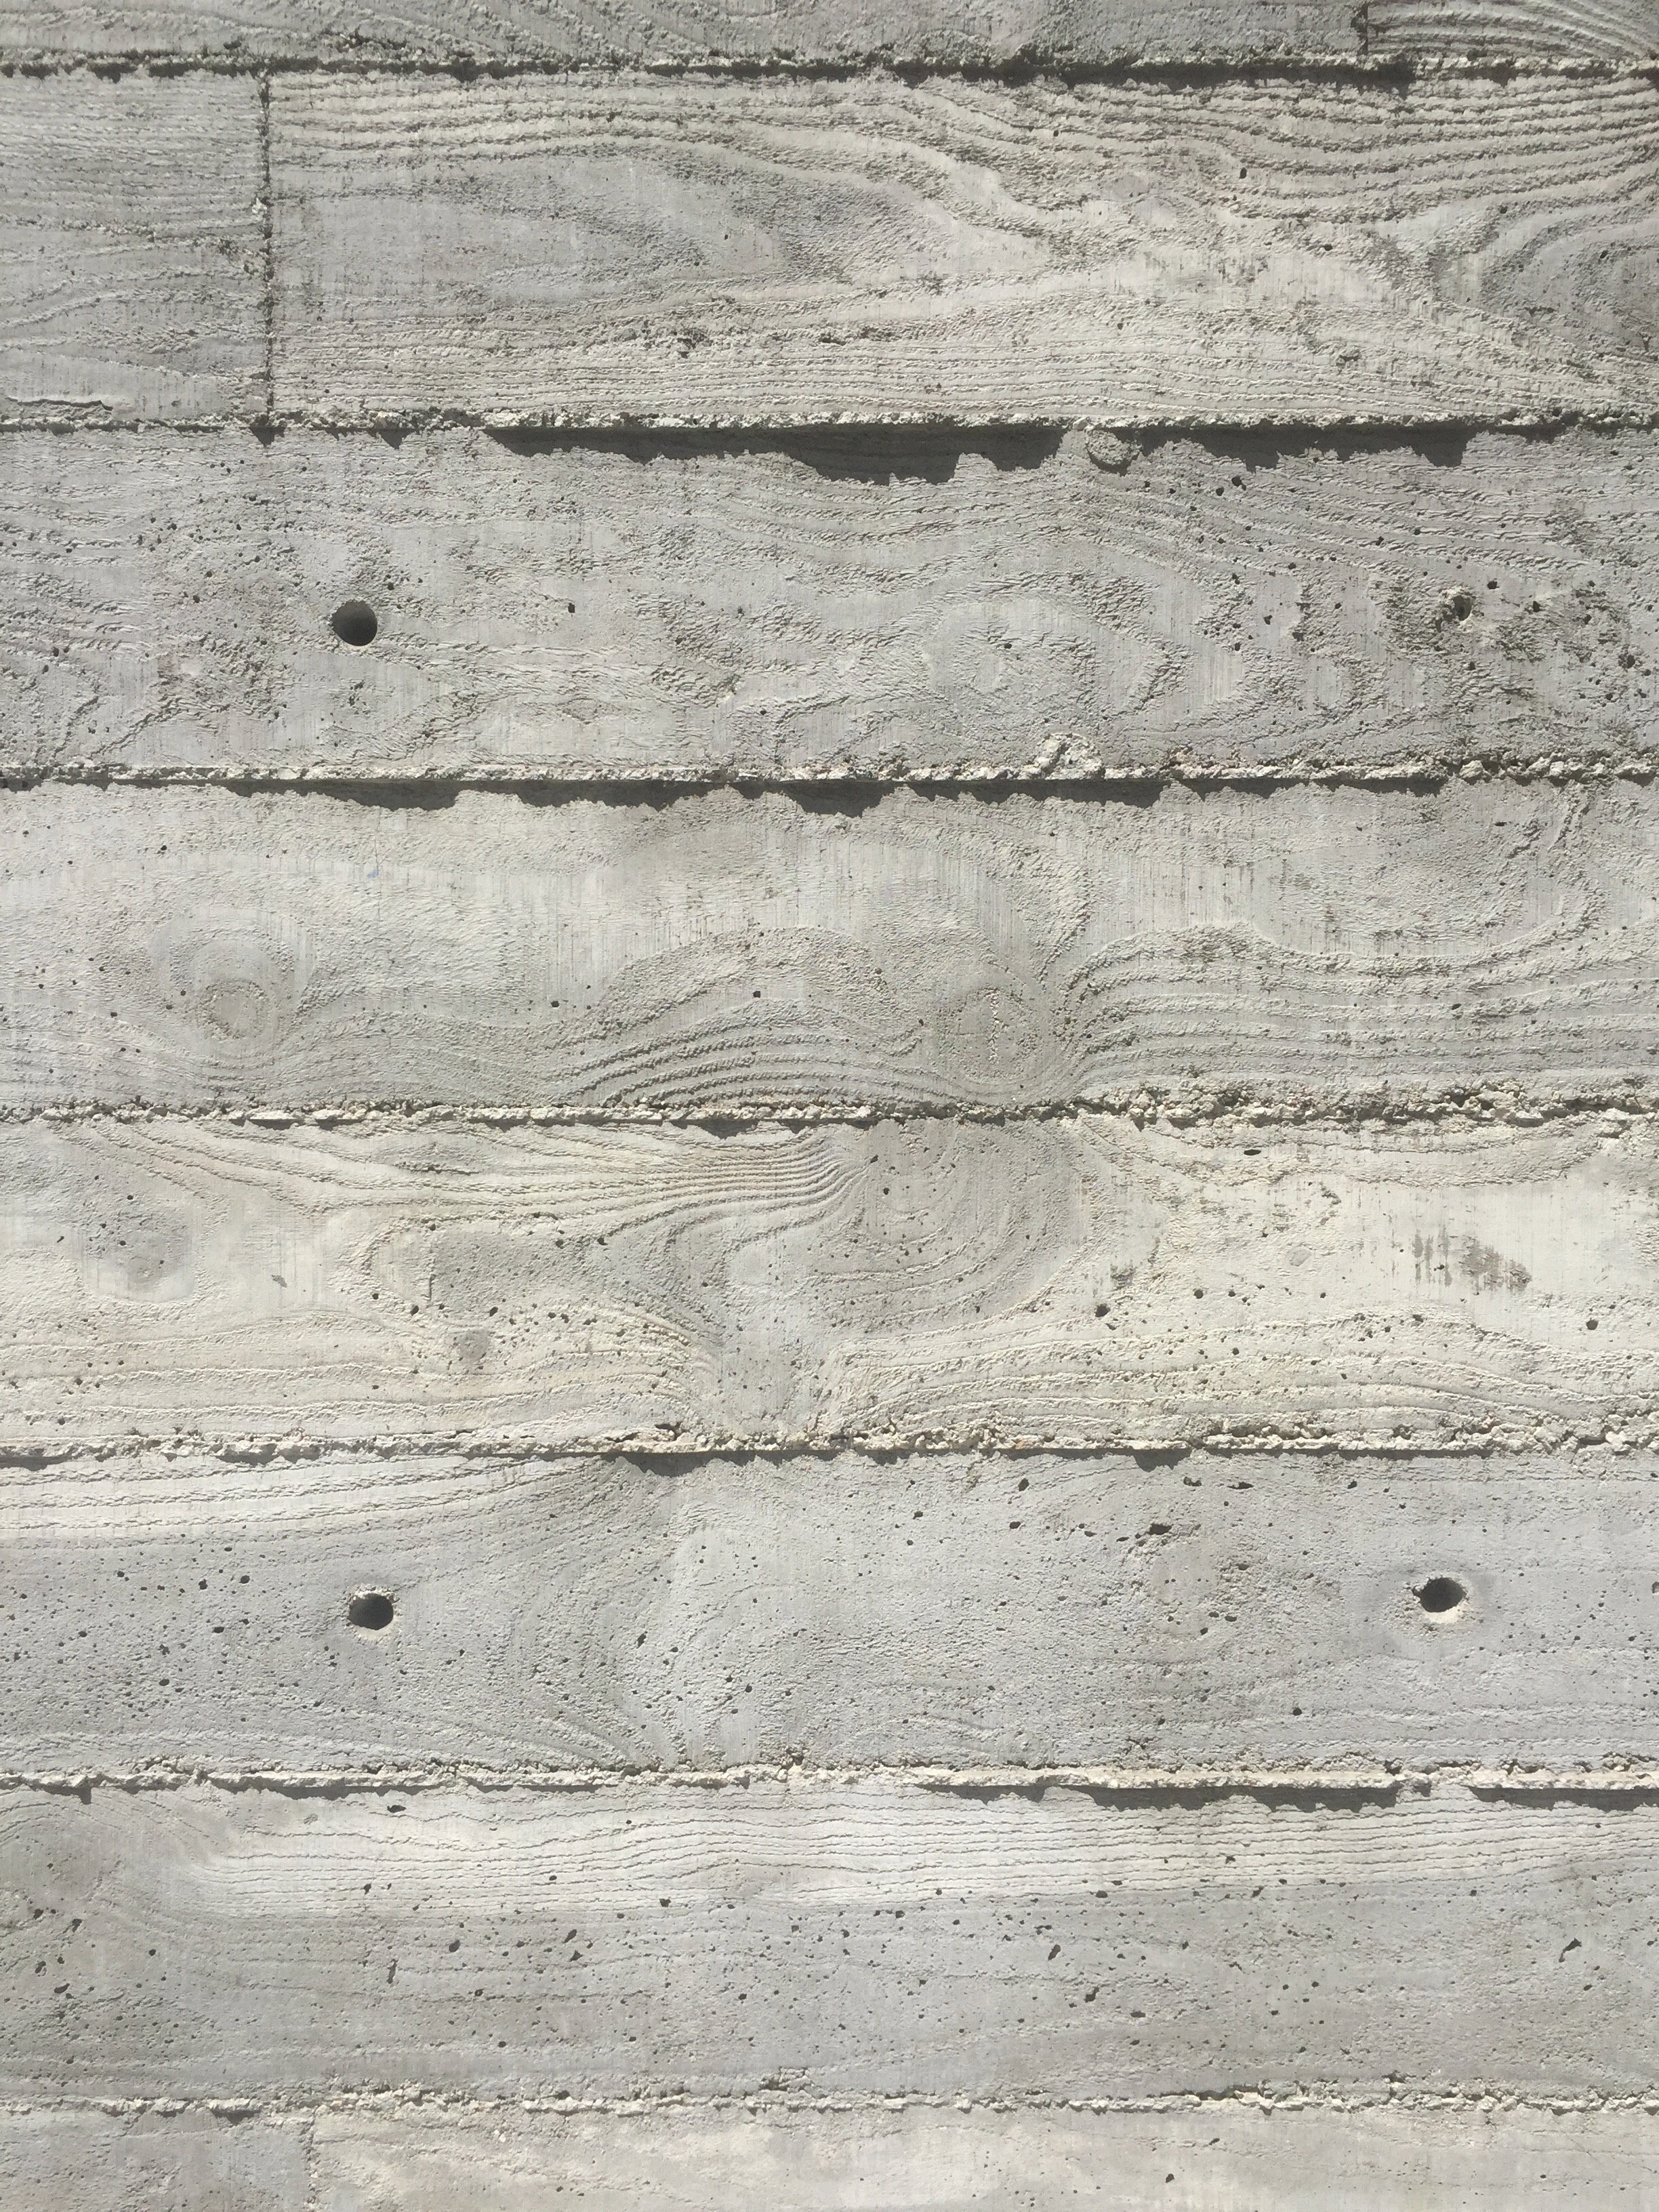 large seamless concrete texture